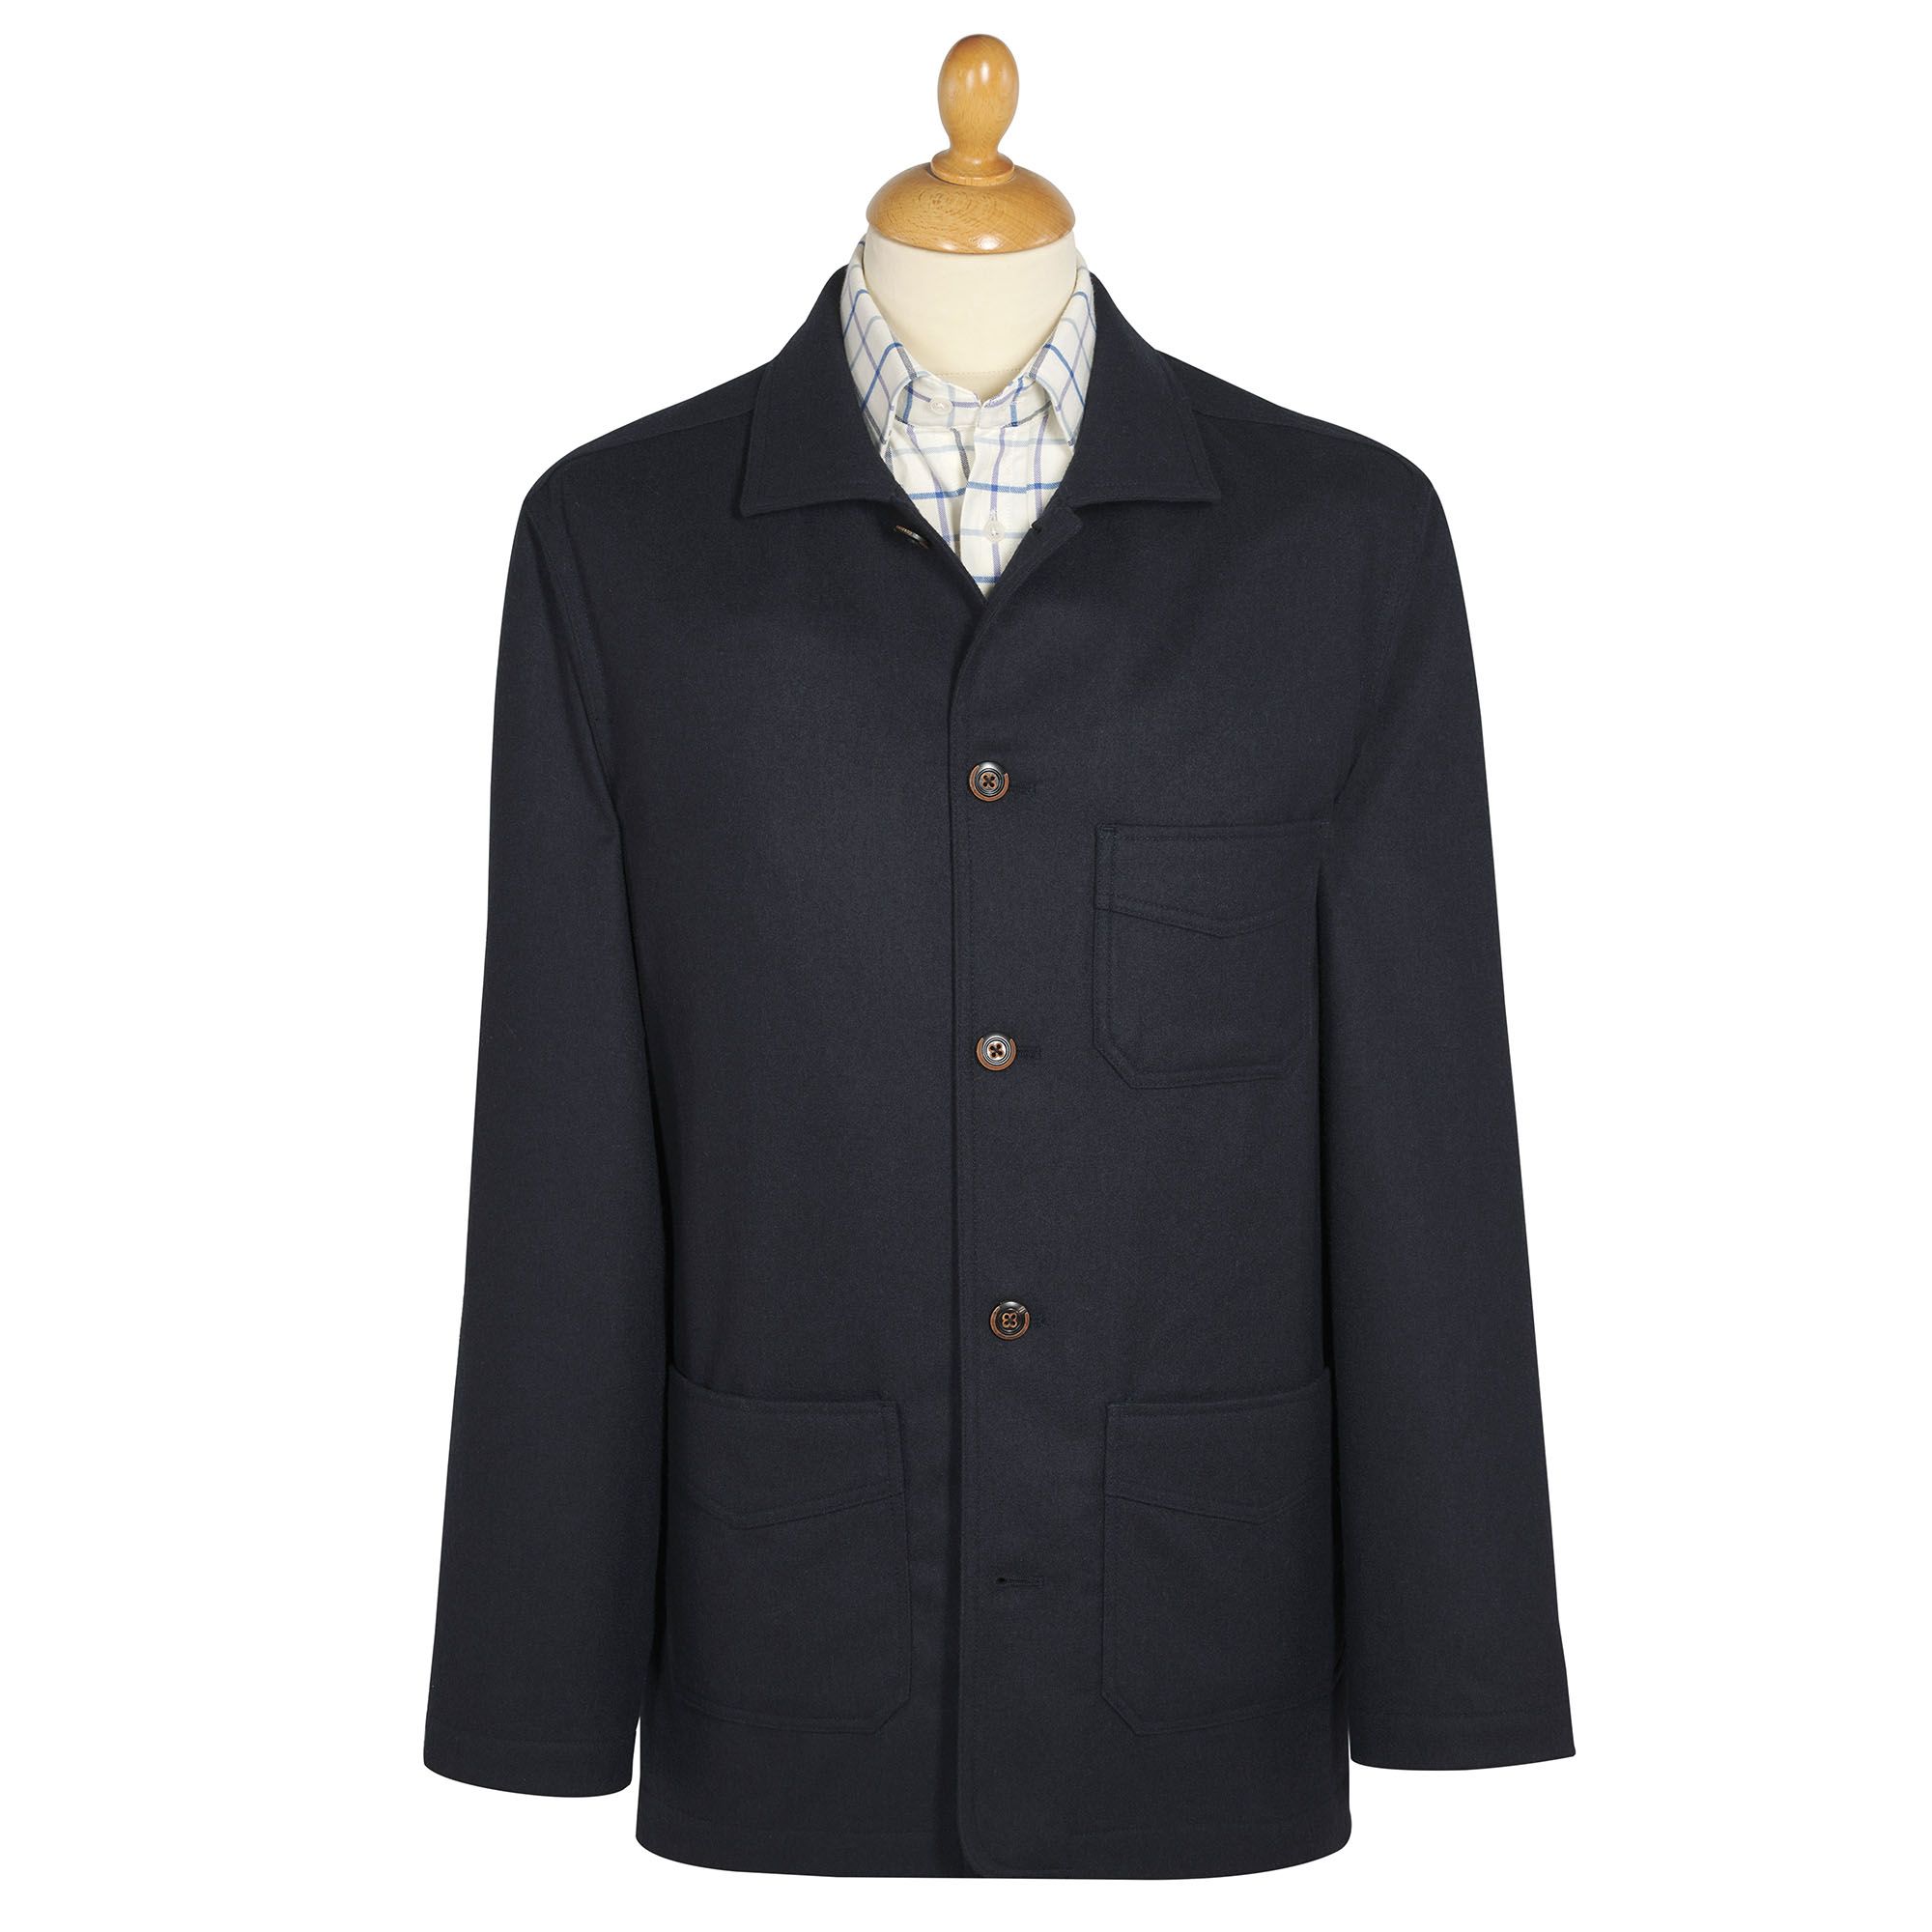 B&TAILOR : Photo | Harris tweed jacket, Tweed sport coat, Preppy mens  fashion